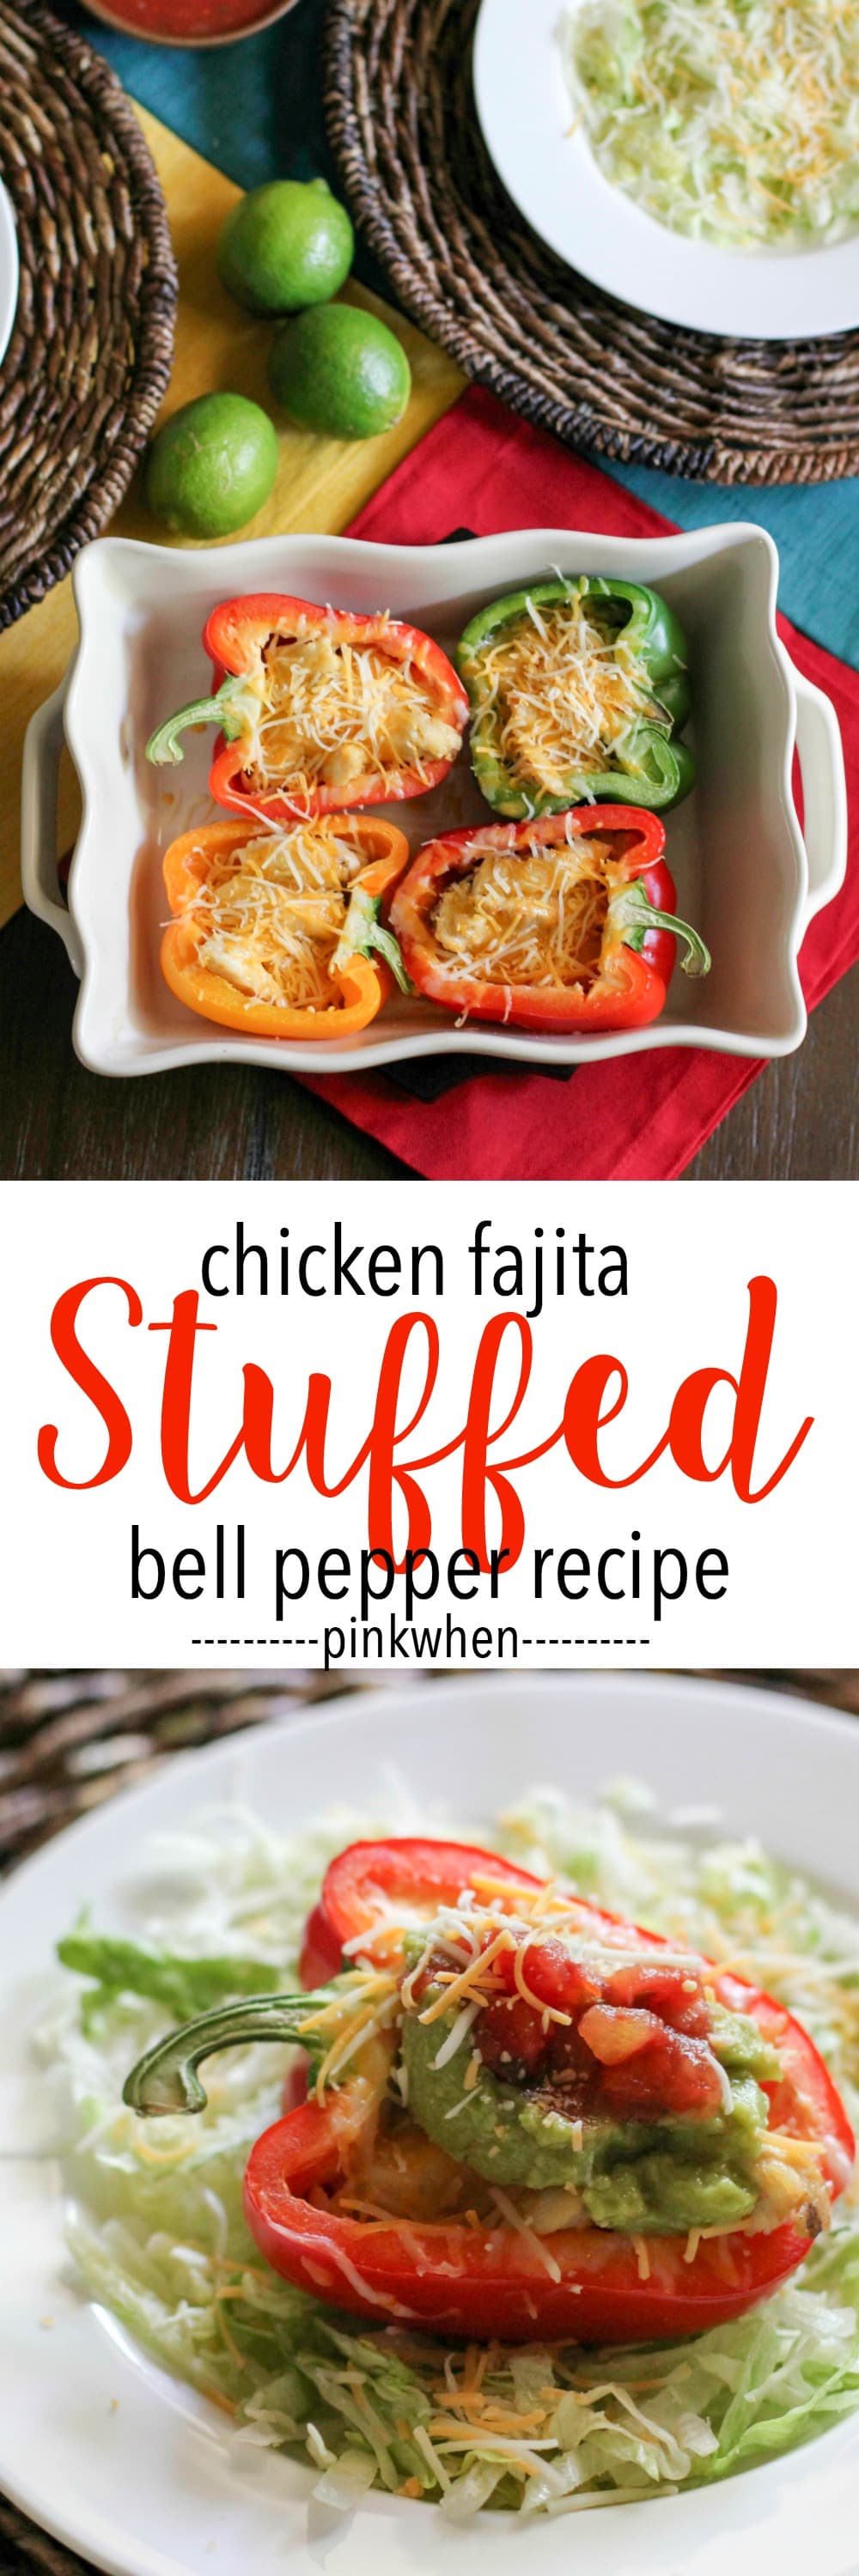 Healthy Chicken Fajita Stuffed Bell Pepper Recipe made with flavored quinoa, chicken, and more!